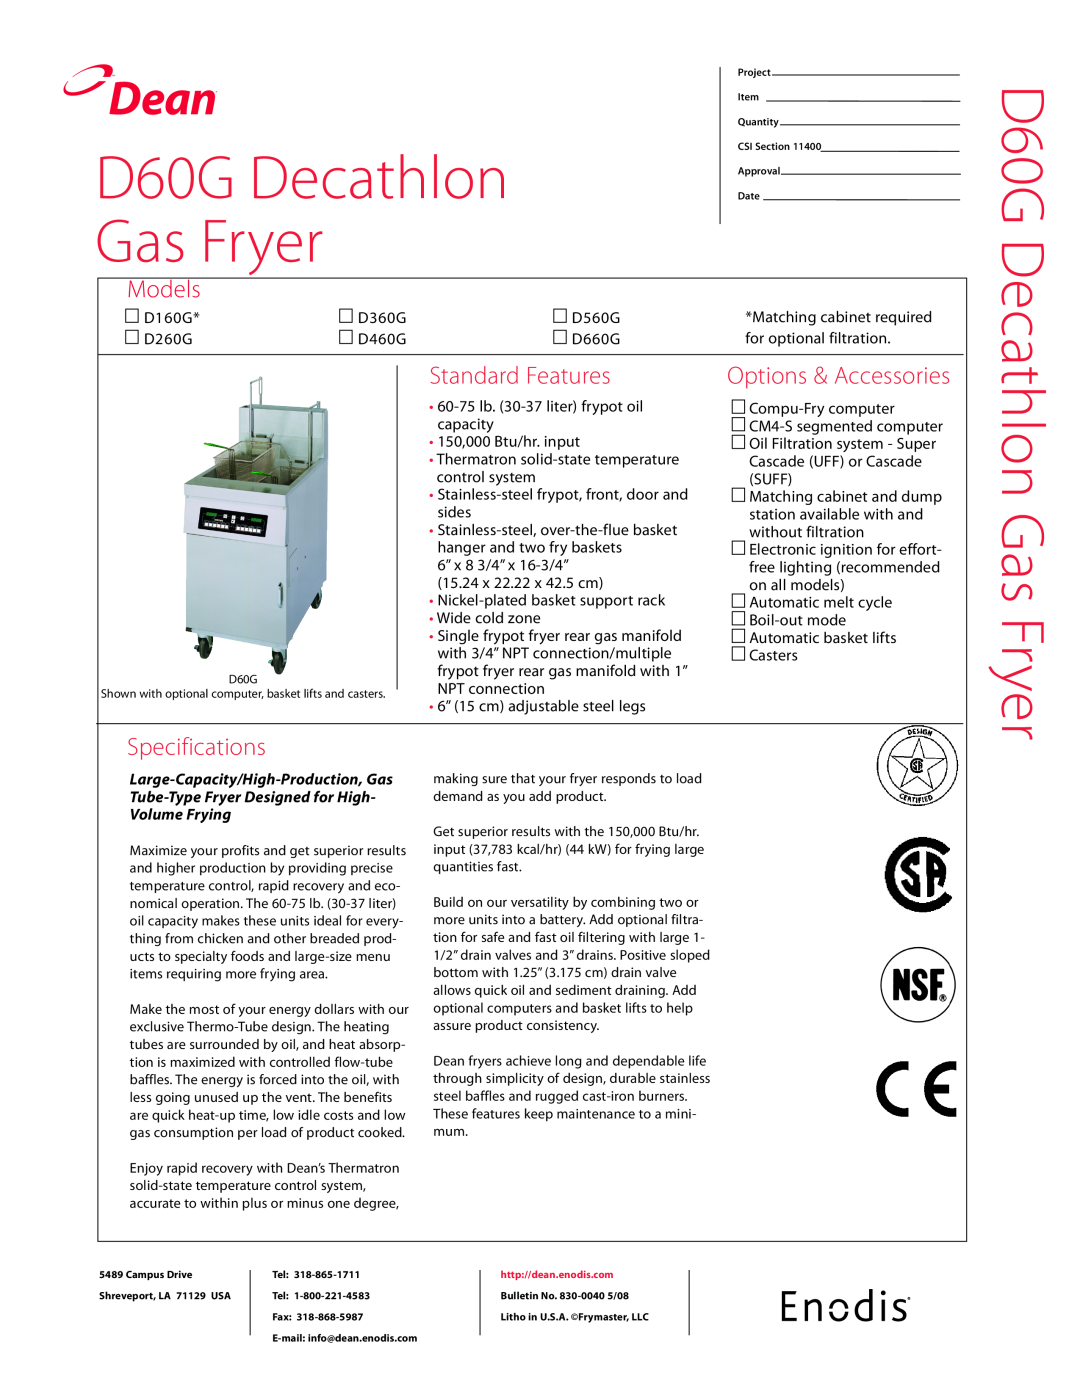 Frymaster D660G, D260G specifications Dean, D60G Decathlon Gas Fryer, Models, Standard Features, Options & Accessories 